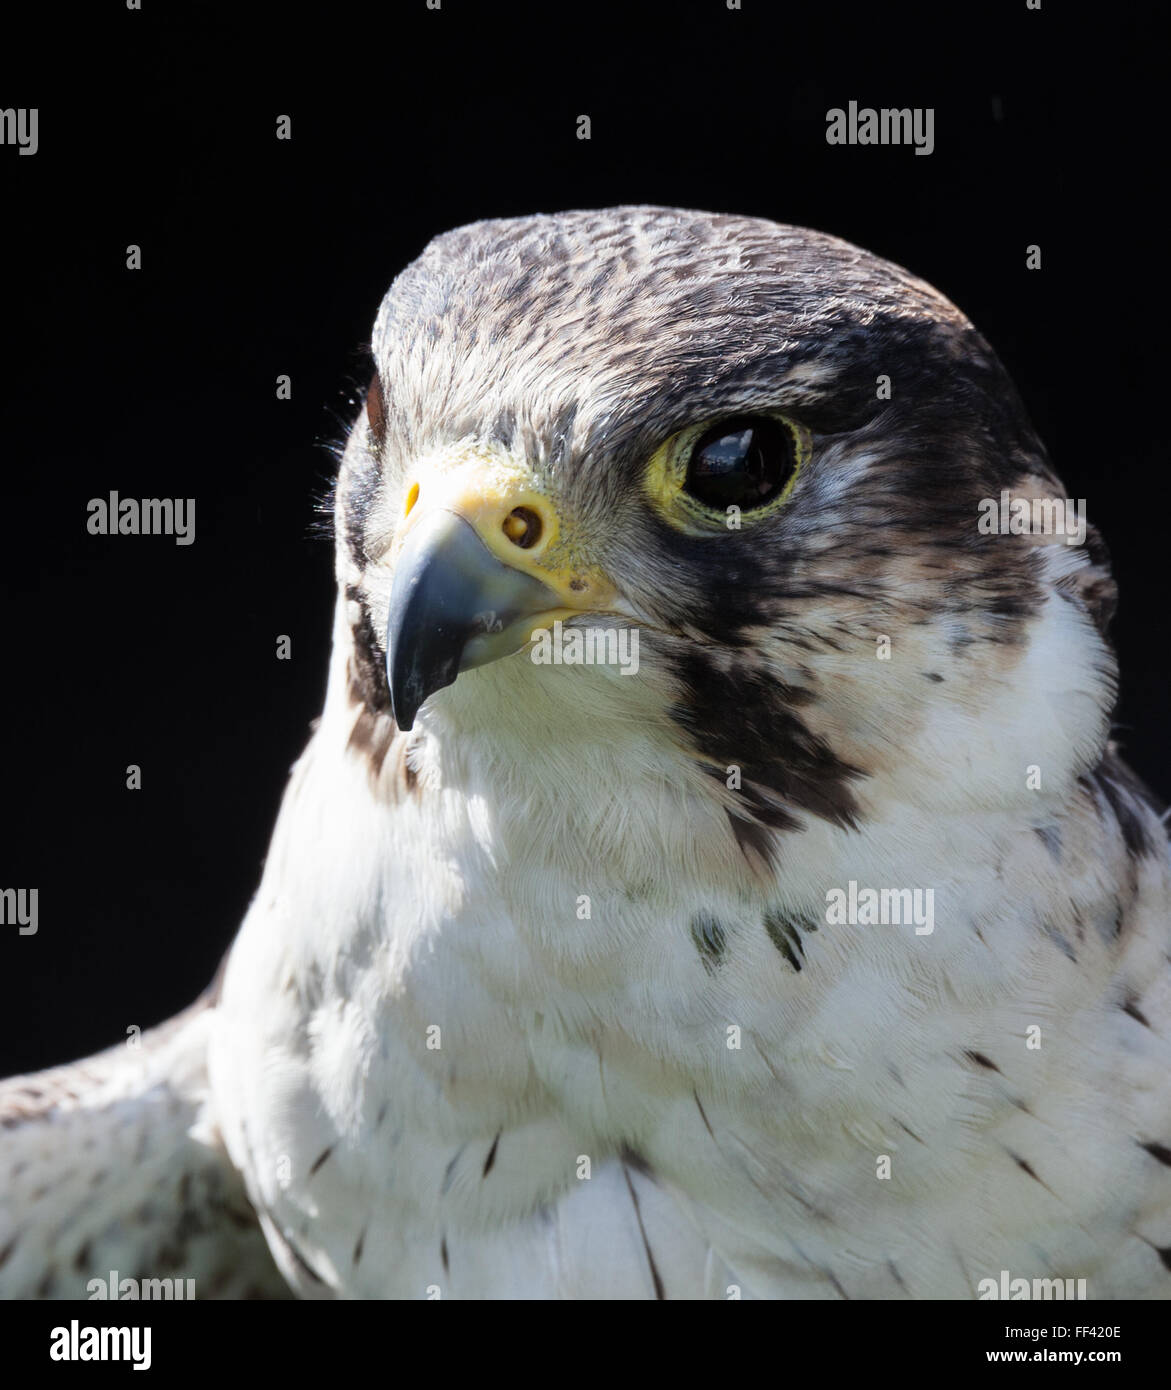 Falco pellegrino close up Foto Stock